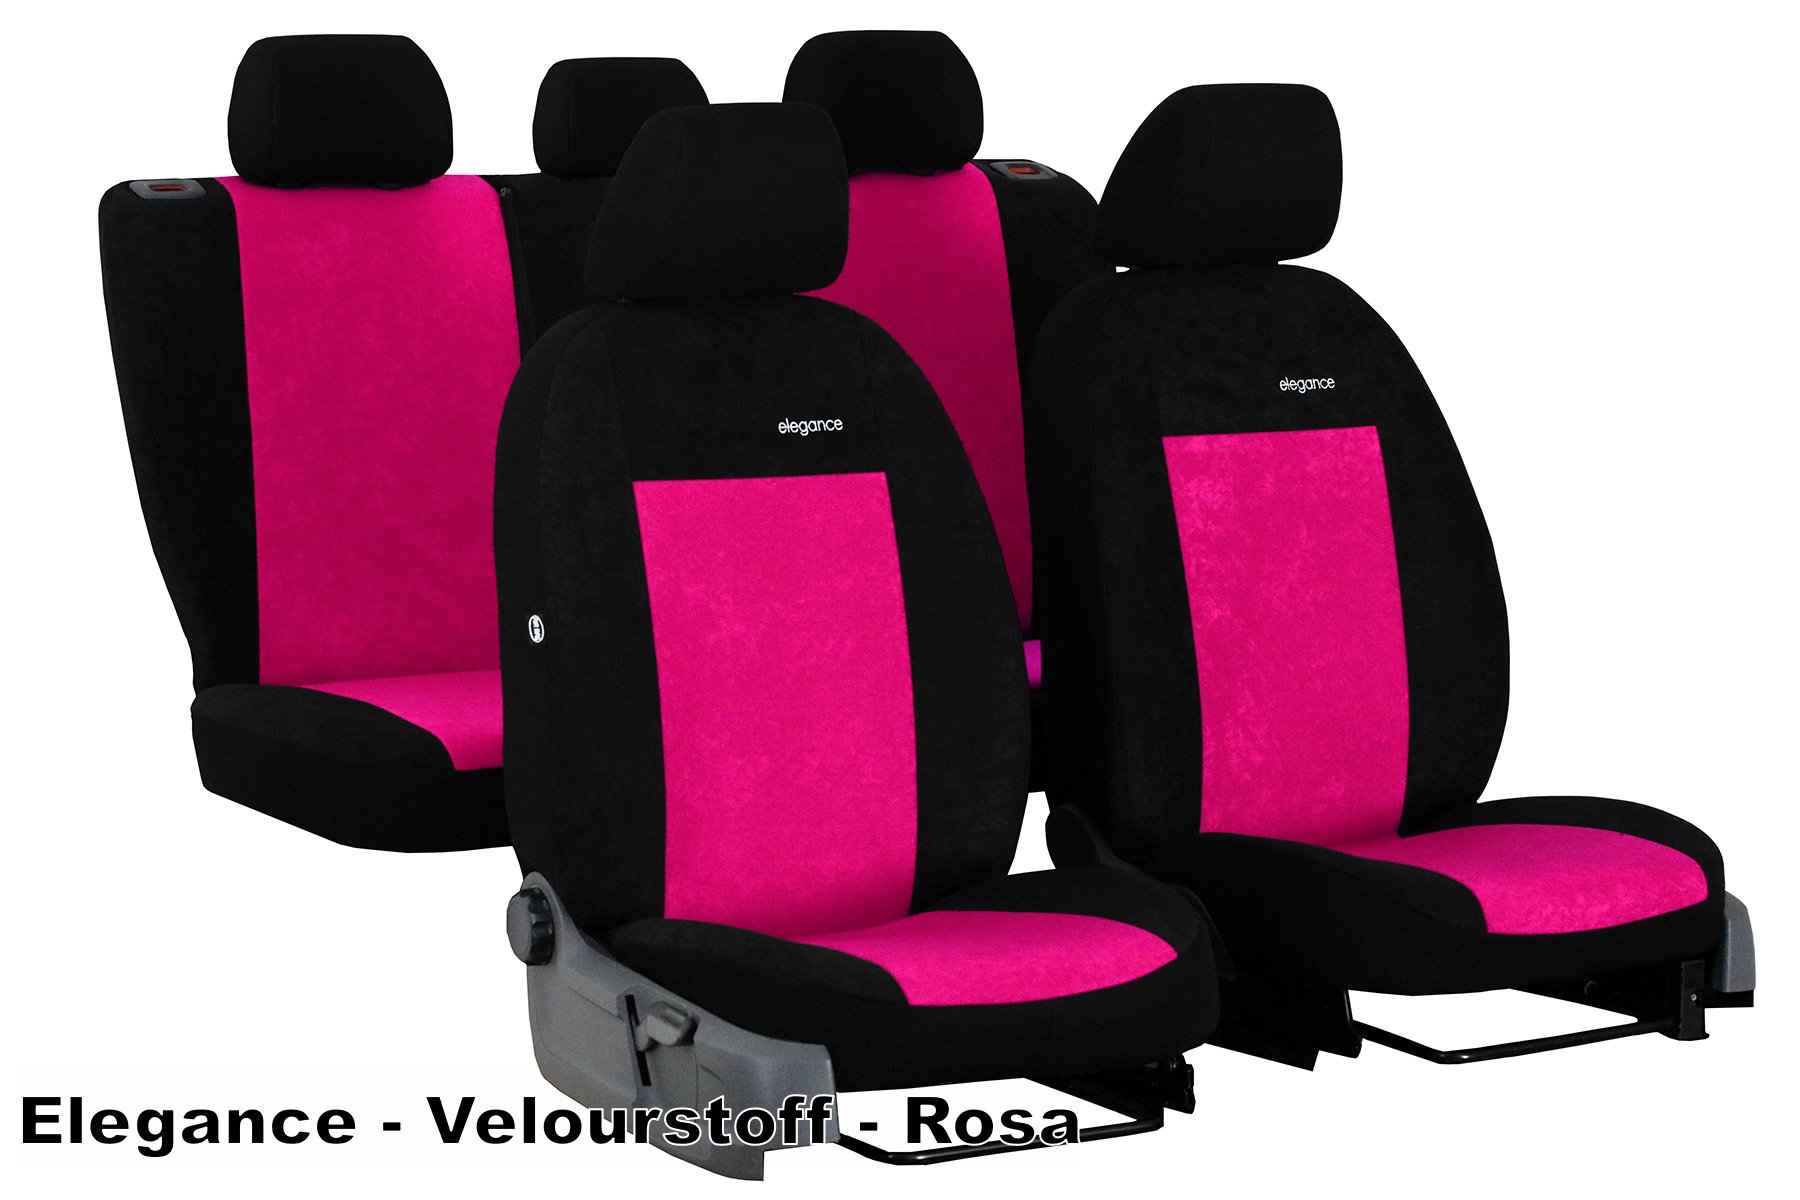 Auto PKW Schonbezug Sitzbezug Sitzbezüge für Seat Arosa